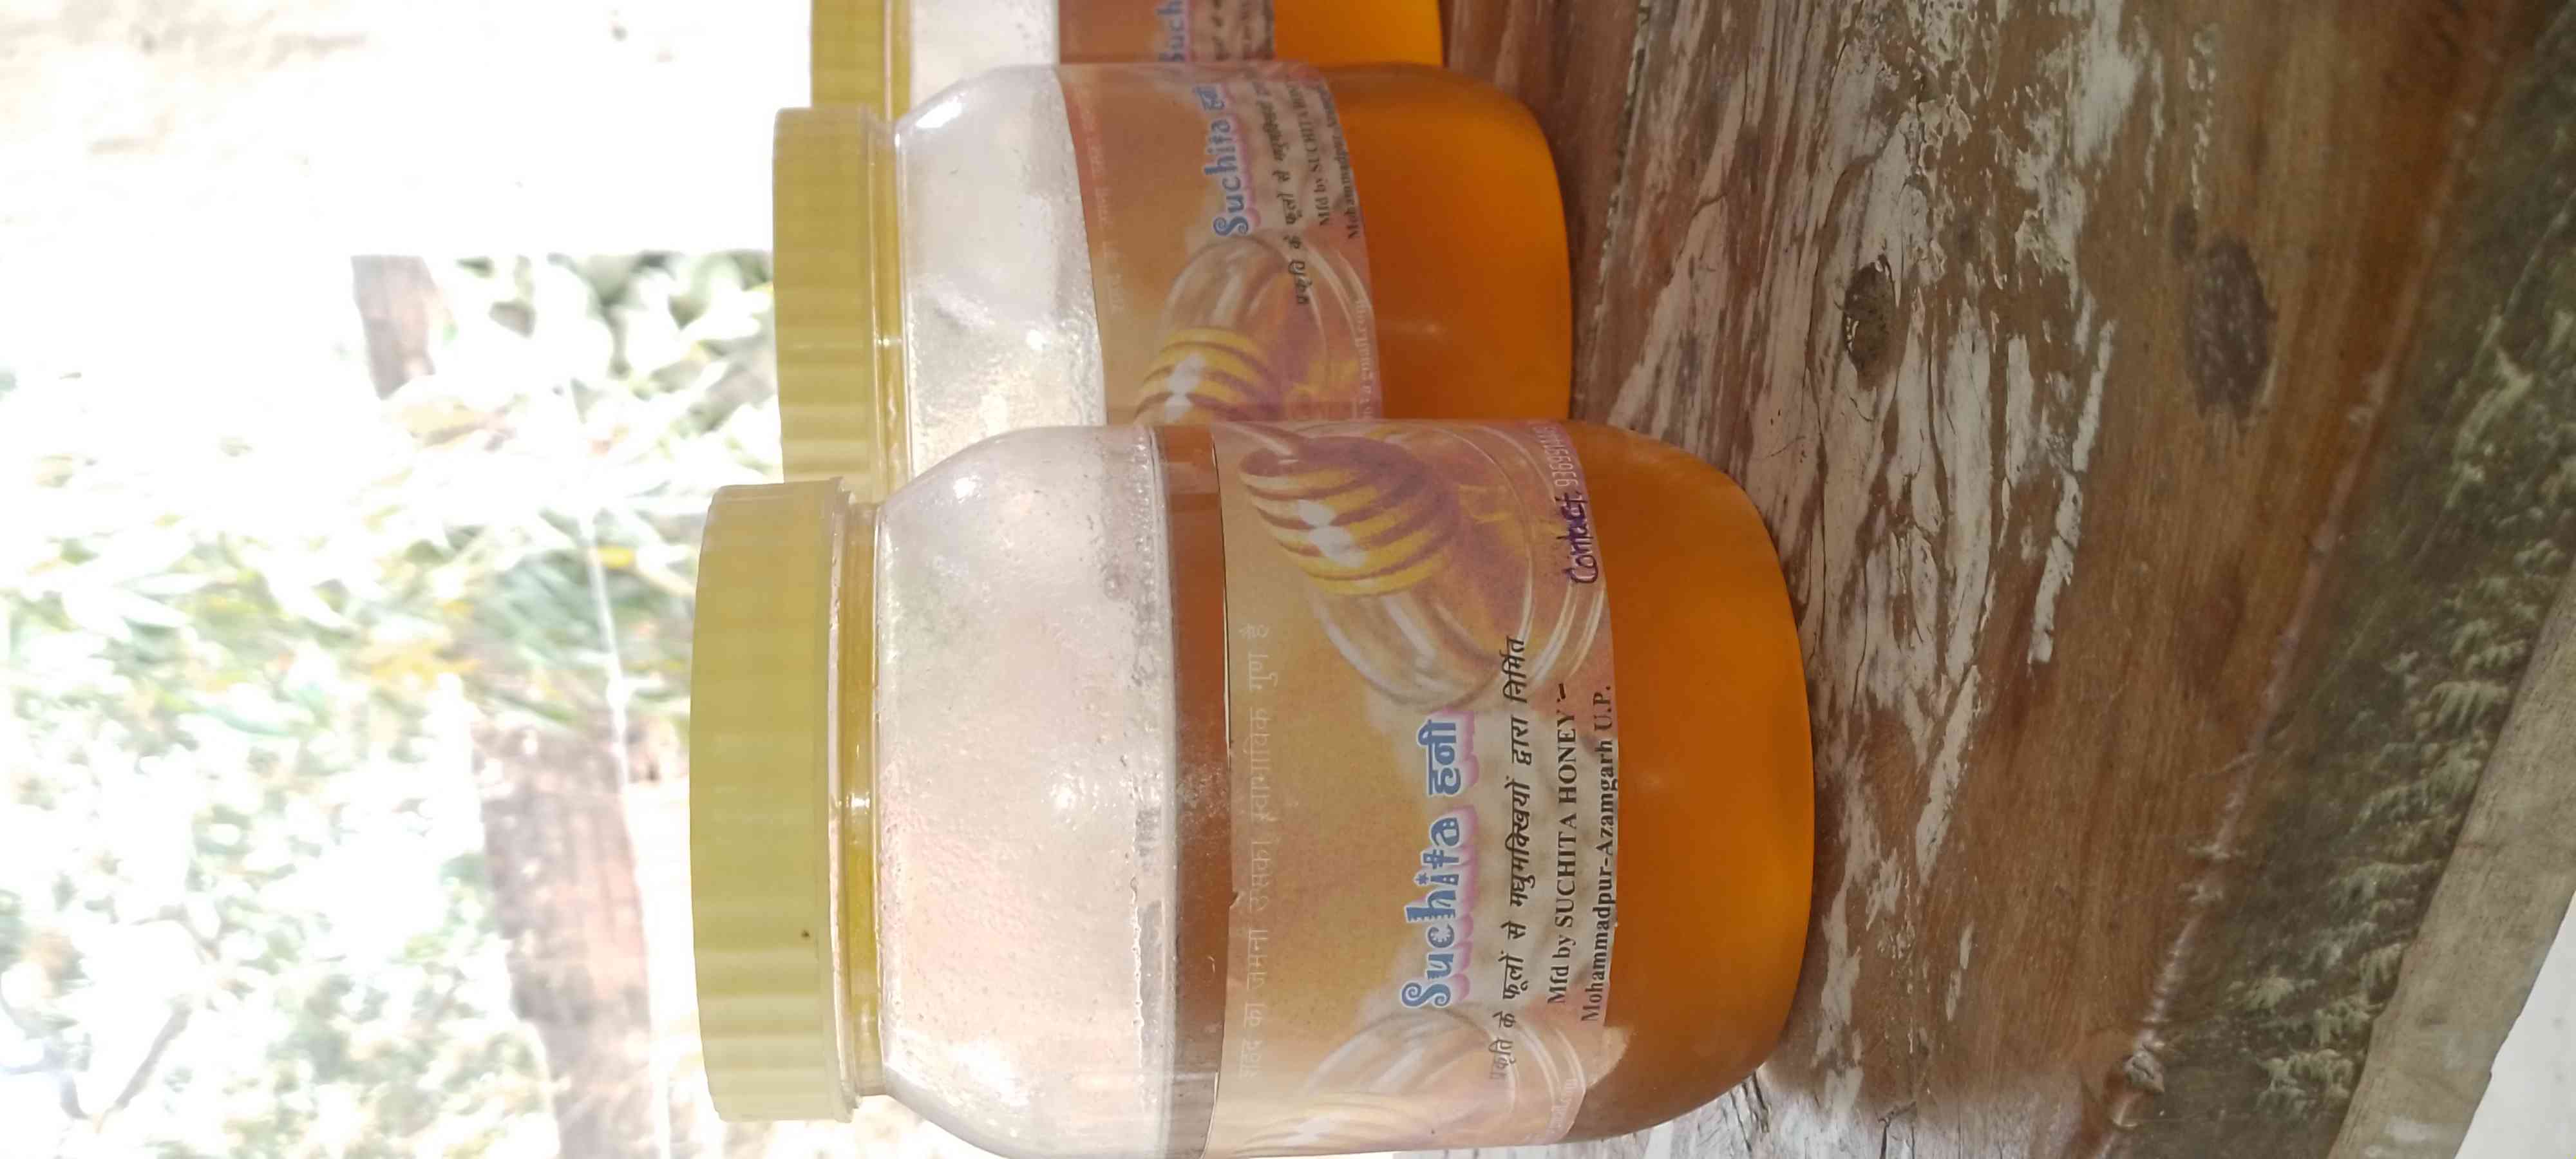 Suchita honey bee farm